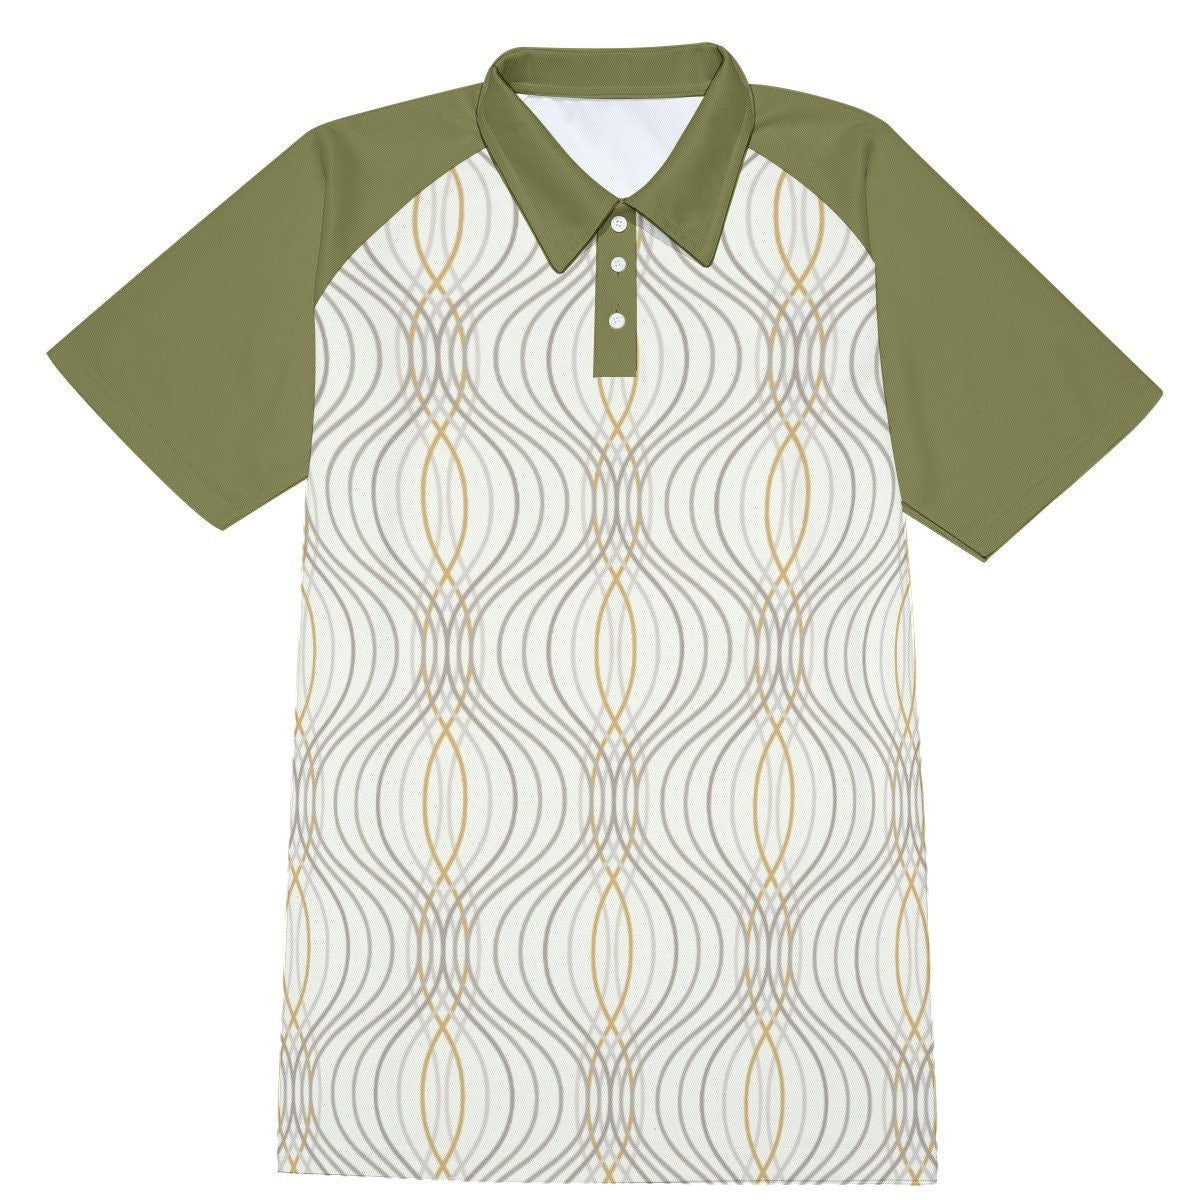 Retro Polo Shirt, Vintage Style Polo Shirt,Men's Polo Shirt,Men's 60s Style Shirt,Vintage 70s Polo shirt, Polo Shirt Vintage, Men's Vintage